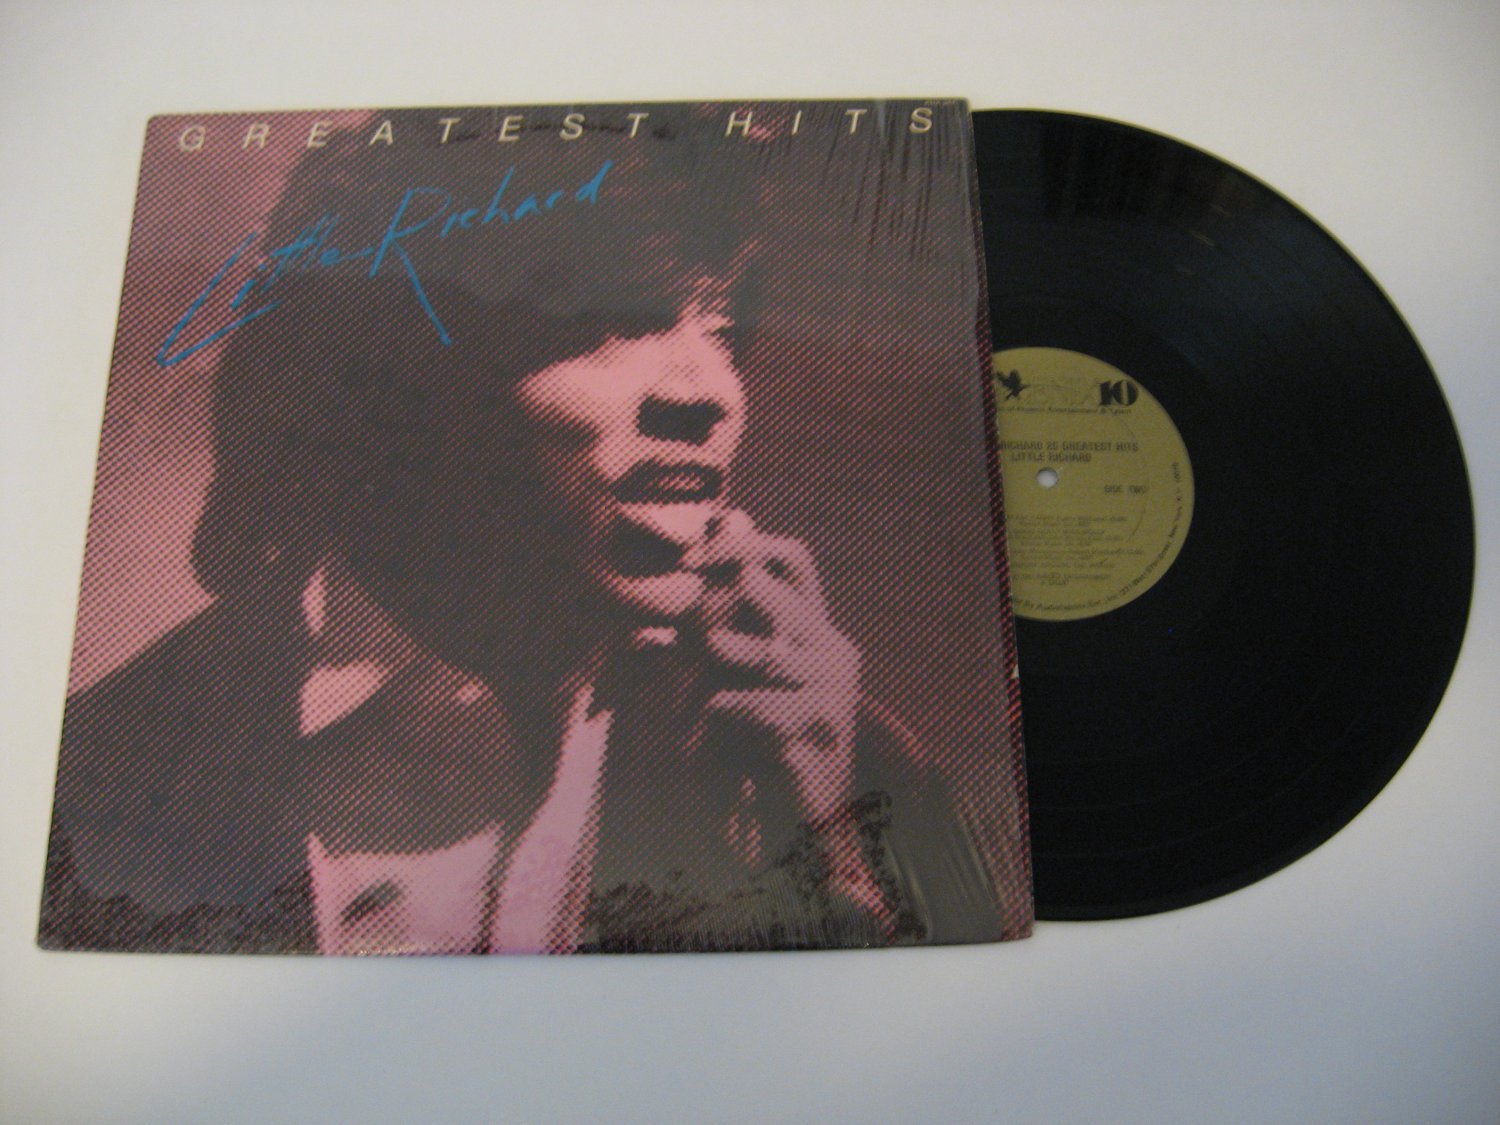 Little Richard - Greatest Hits  (Vinyl Records)